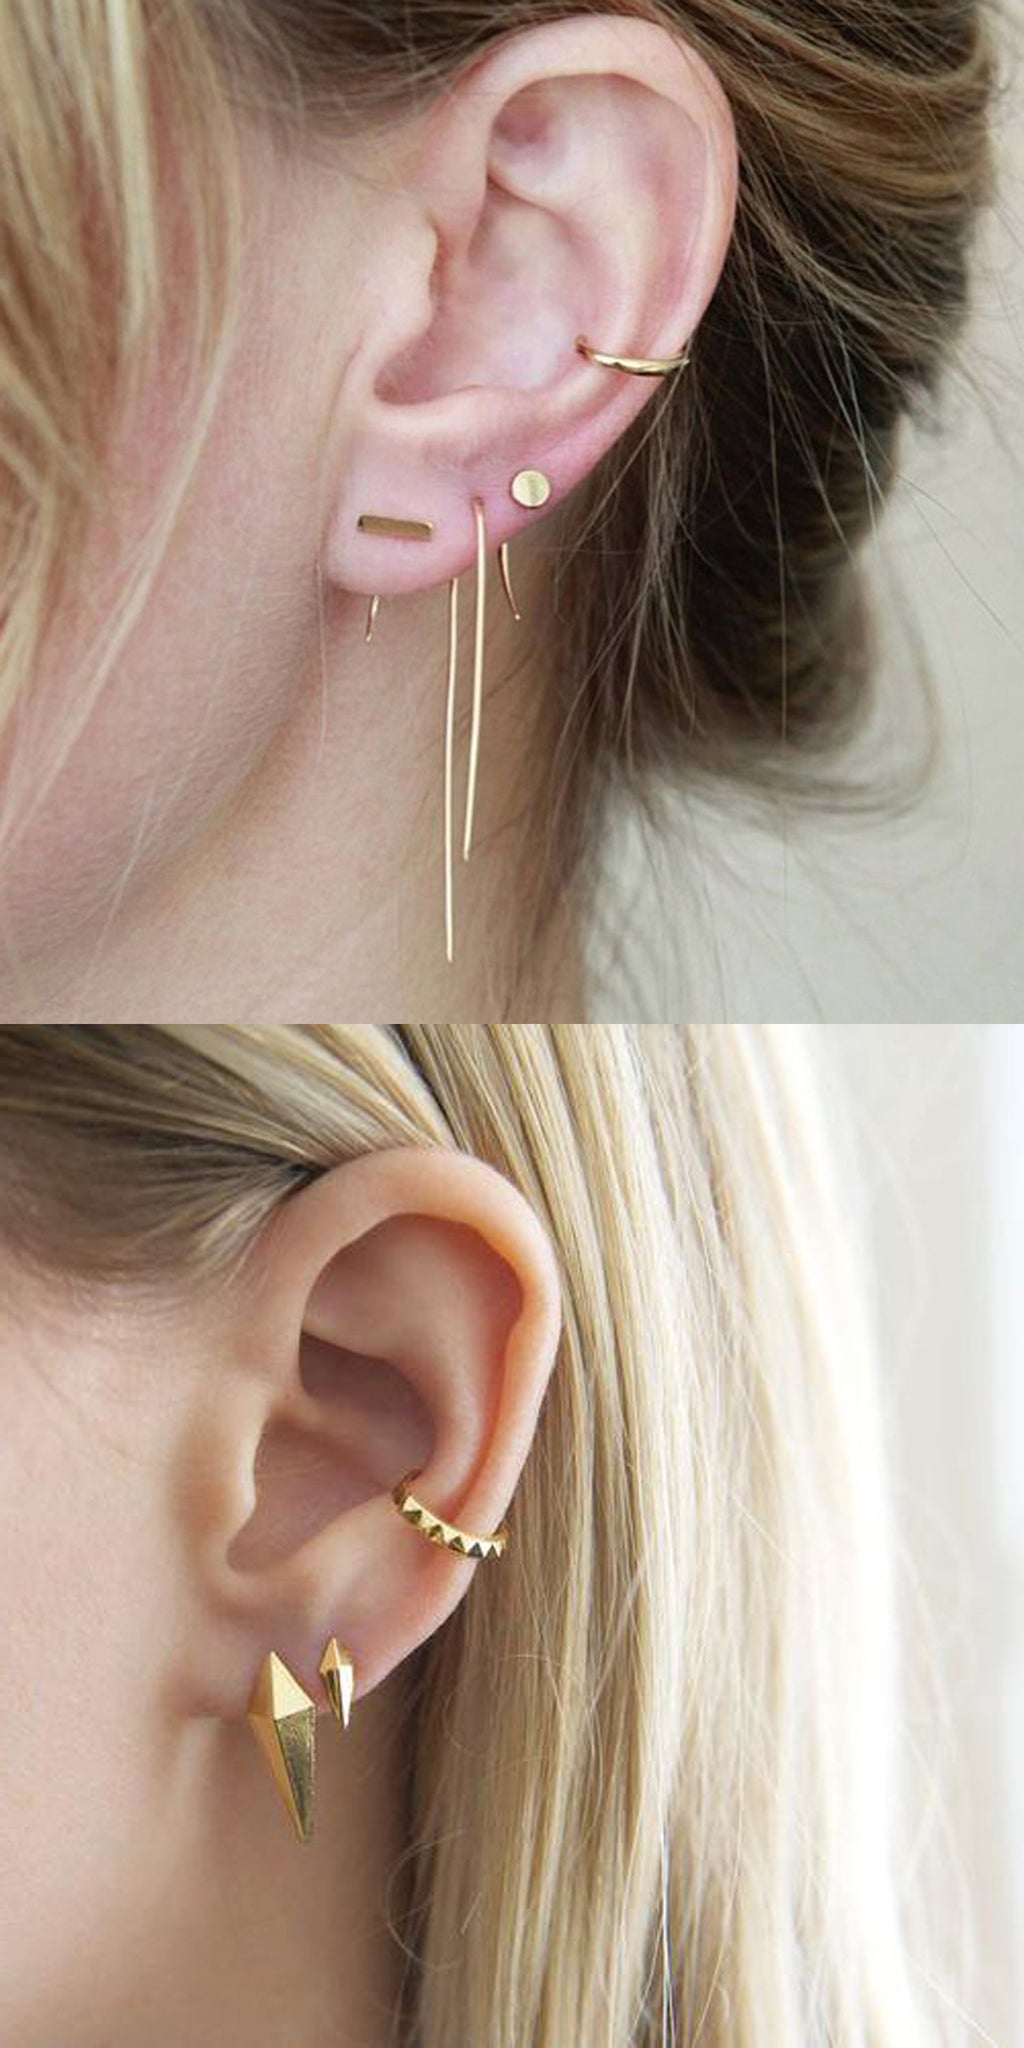 Creative Multiple Ear Piercing Ideas Placement - Gold Cuff Conch Ring Hoop - Ear Lobe Minimalist Stud Earrings - MyBodiArt.com